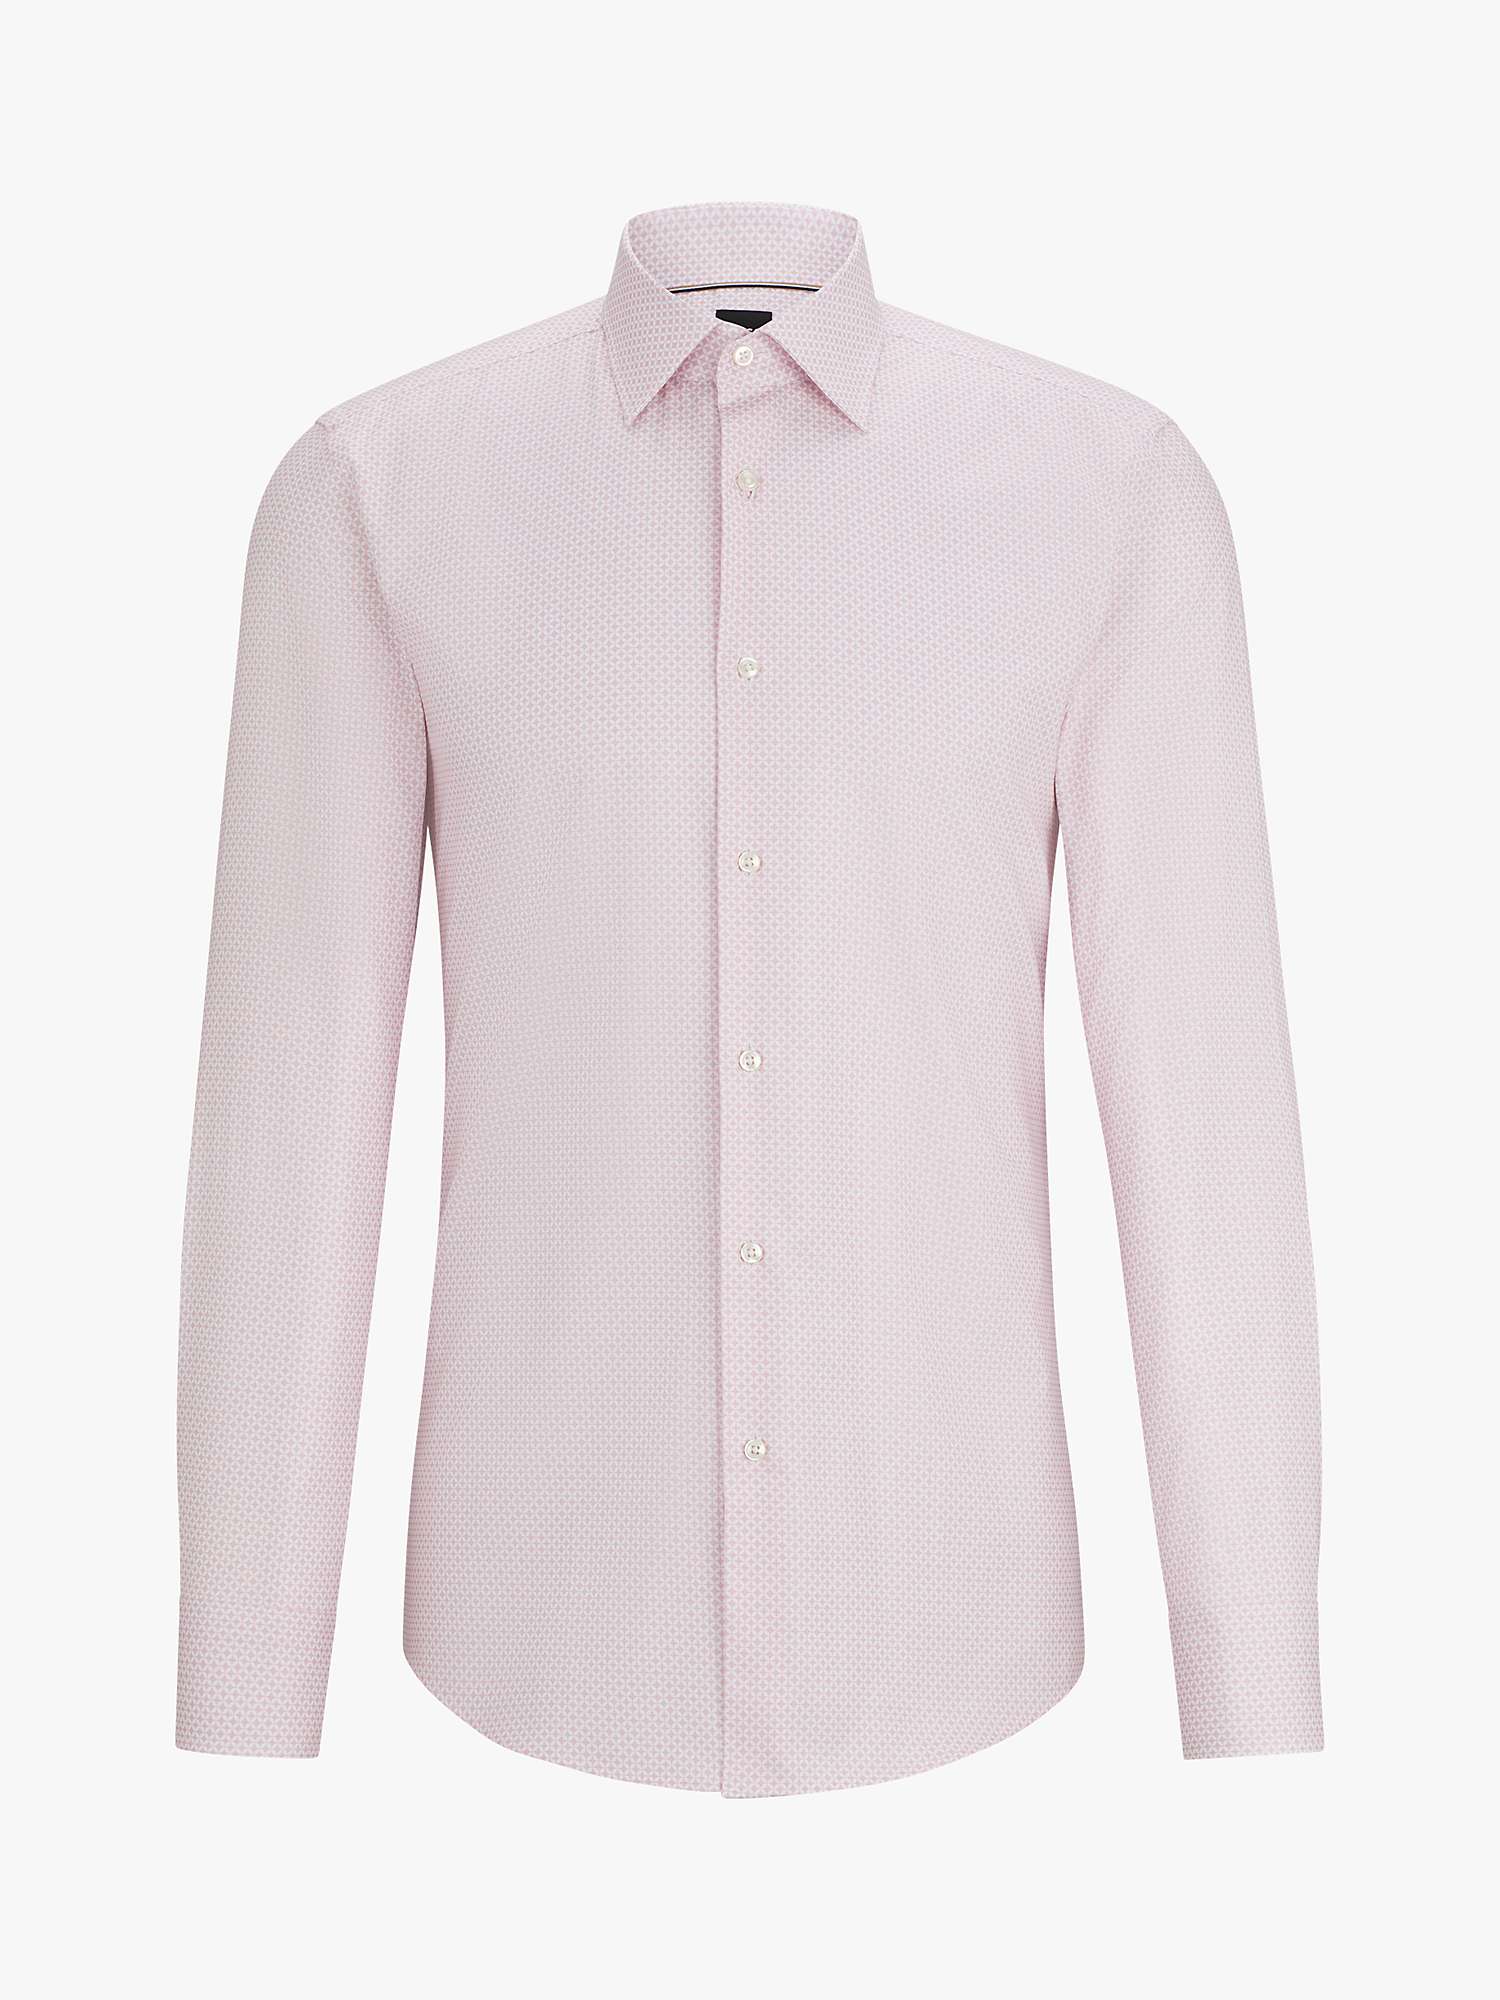 Buy BOSS Slim Fit Shirt, Light/Pastel Pink Online at johnlewis.com